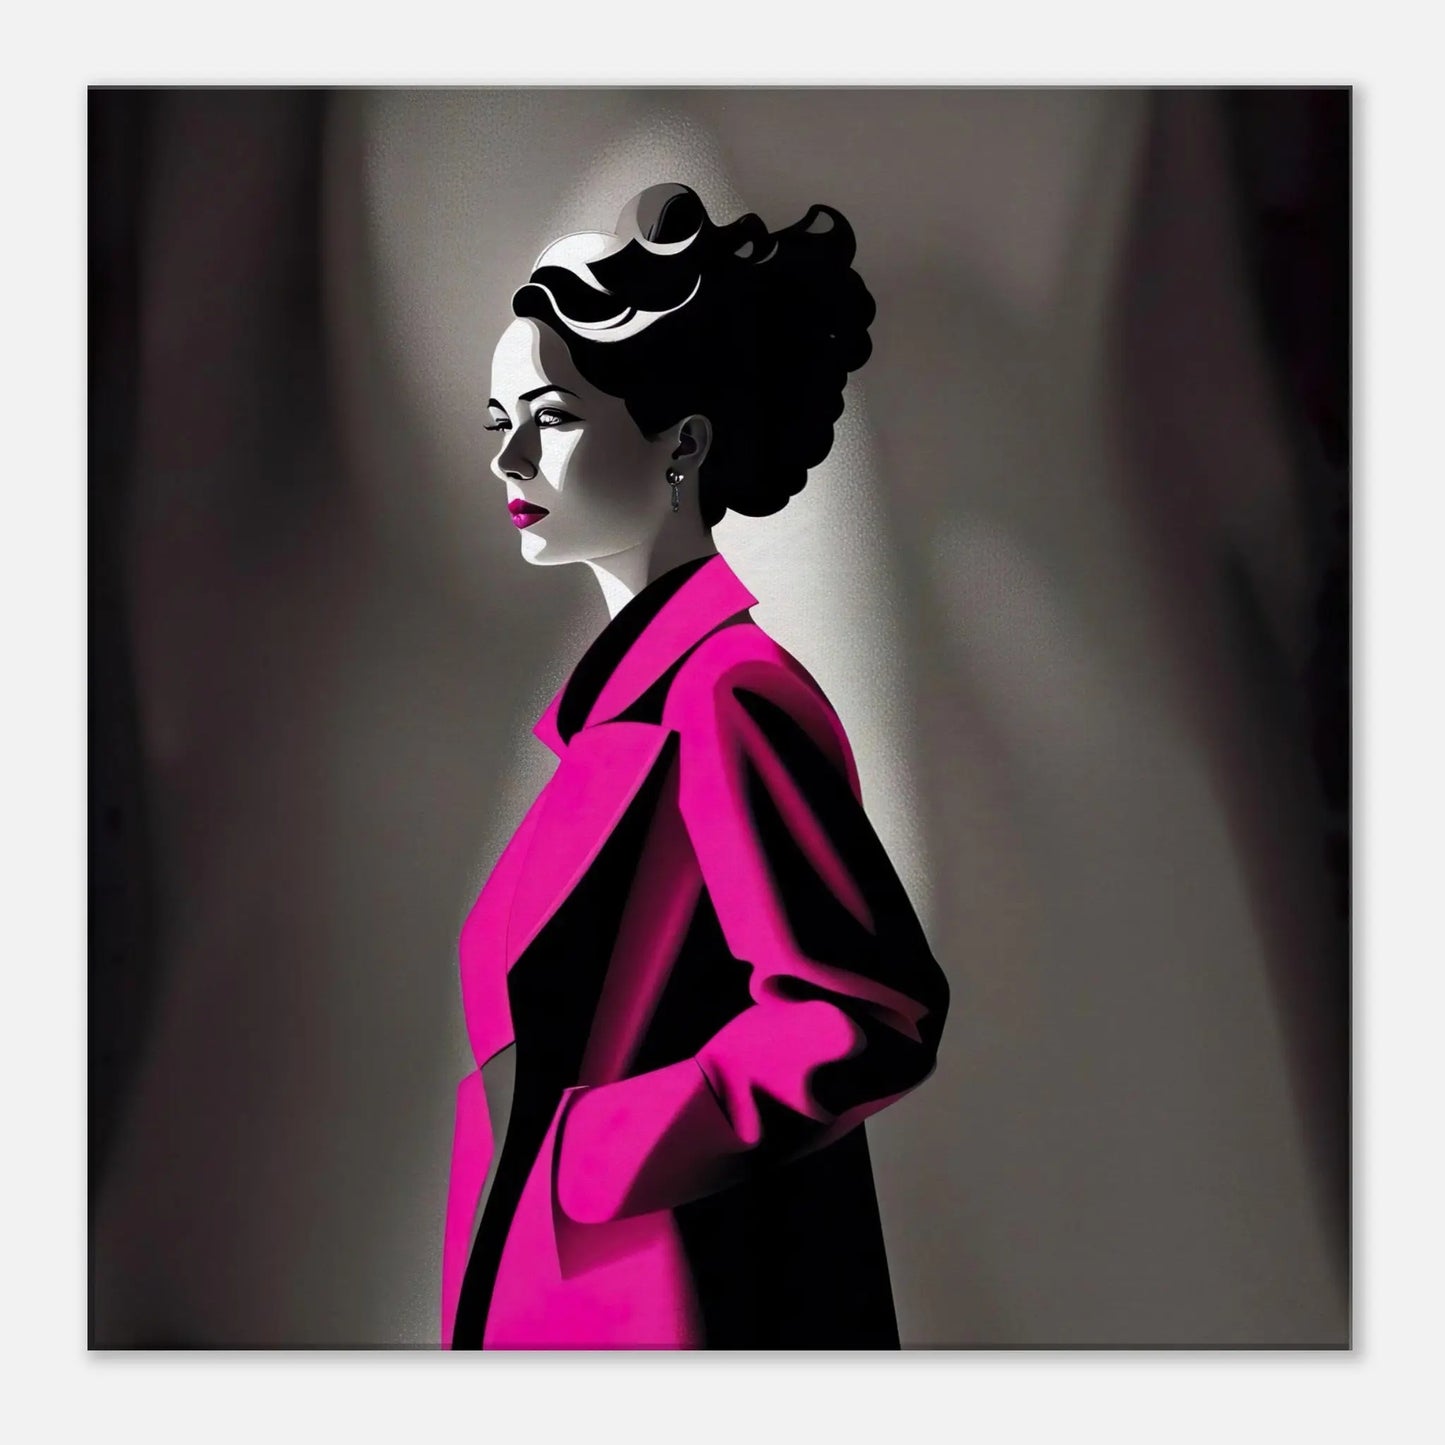 Leinwandbild - Frau im rosa Mantel - Schwarz-Weiß Stil, KI-Kunst - RolConArt, Schwarz-Weiß mit Akzentfarben, 60x60-cm-24x24